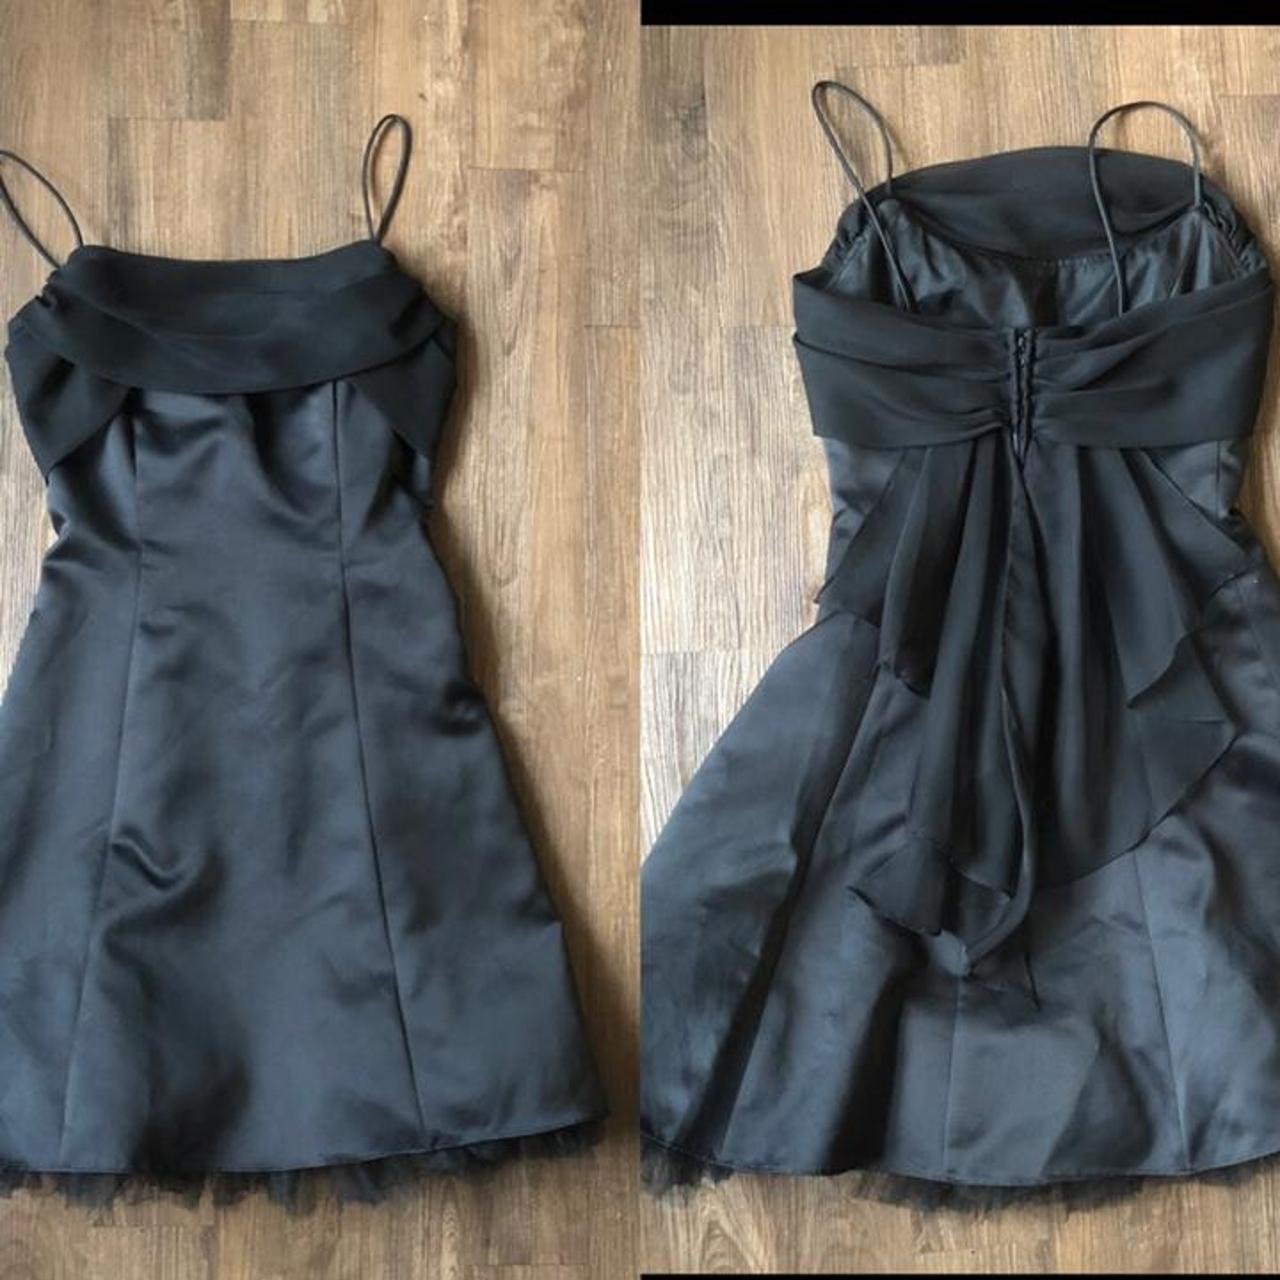 Betsy & Adam Women's Black Dress (3)